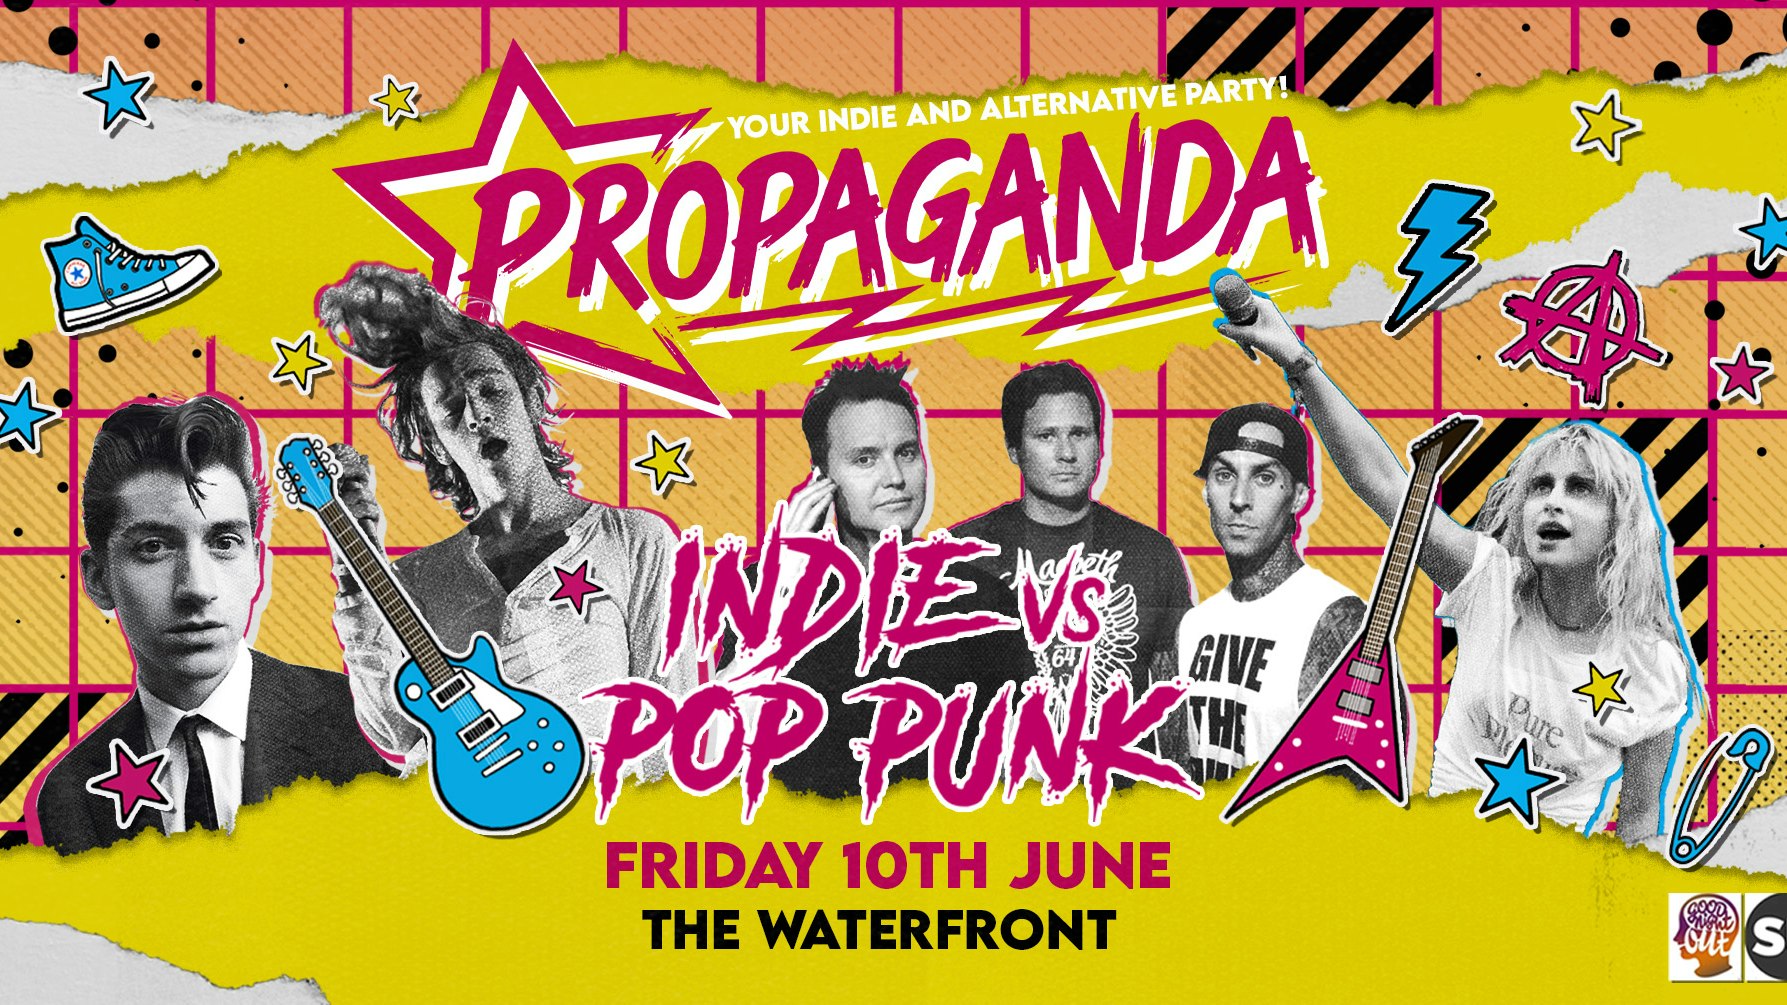 Propaganda Norwich – Indie vs Pop-Punk!